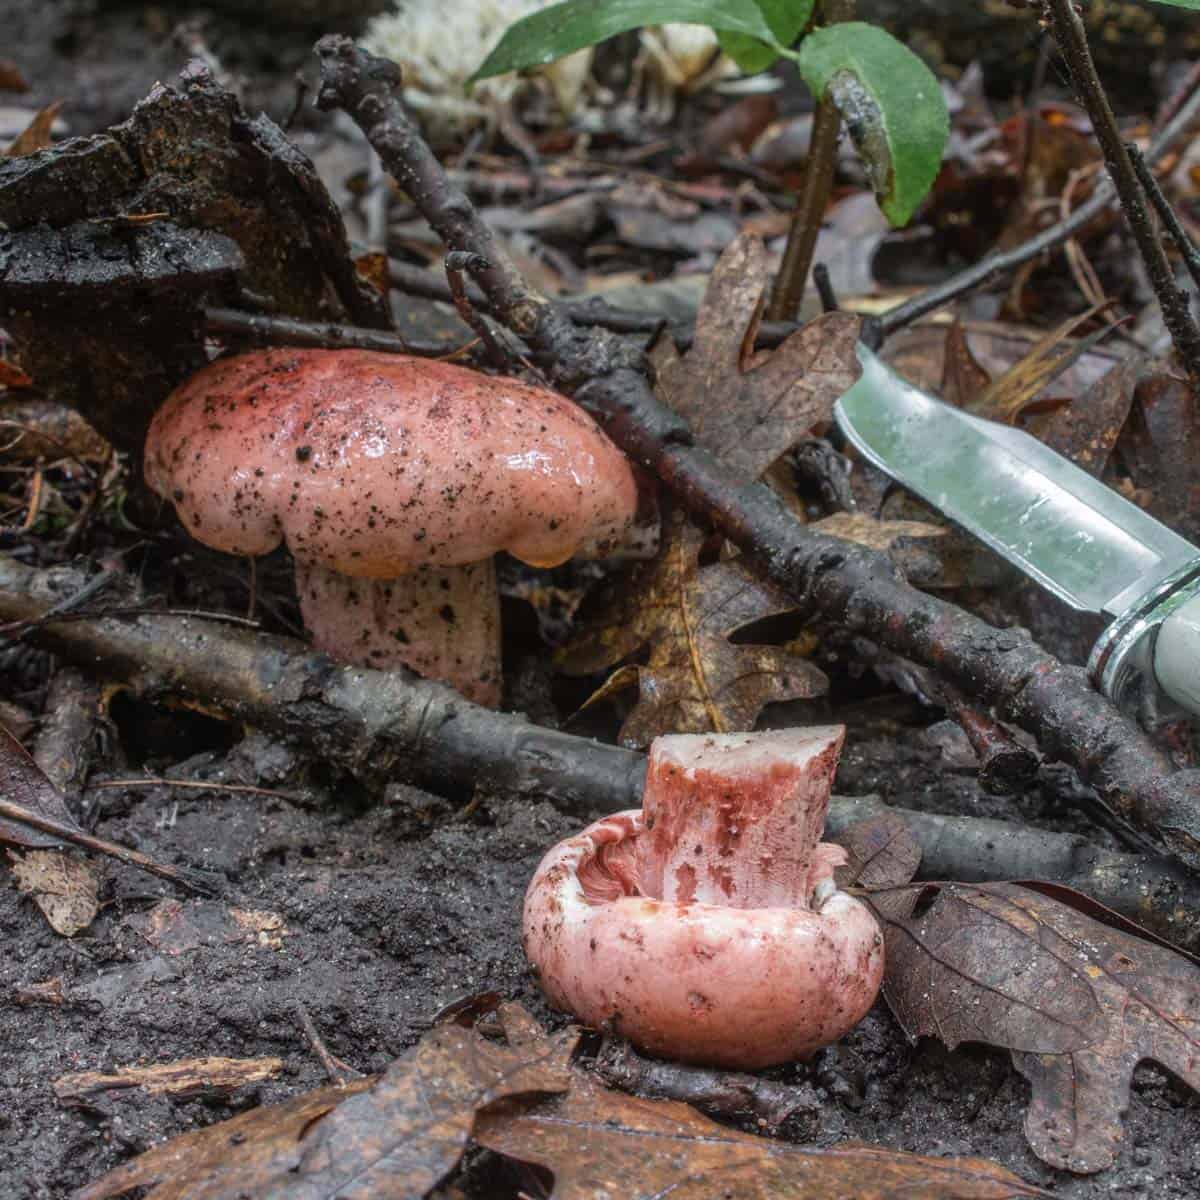 Hygrophorus russula mushrooms in the woods.